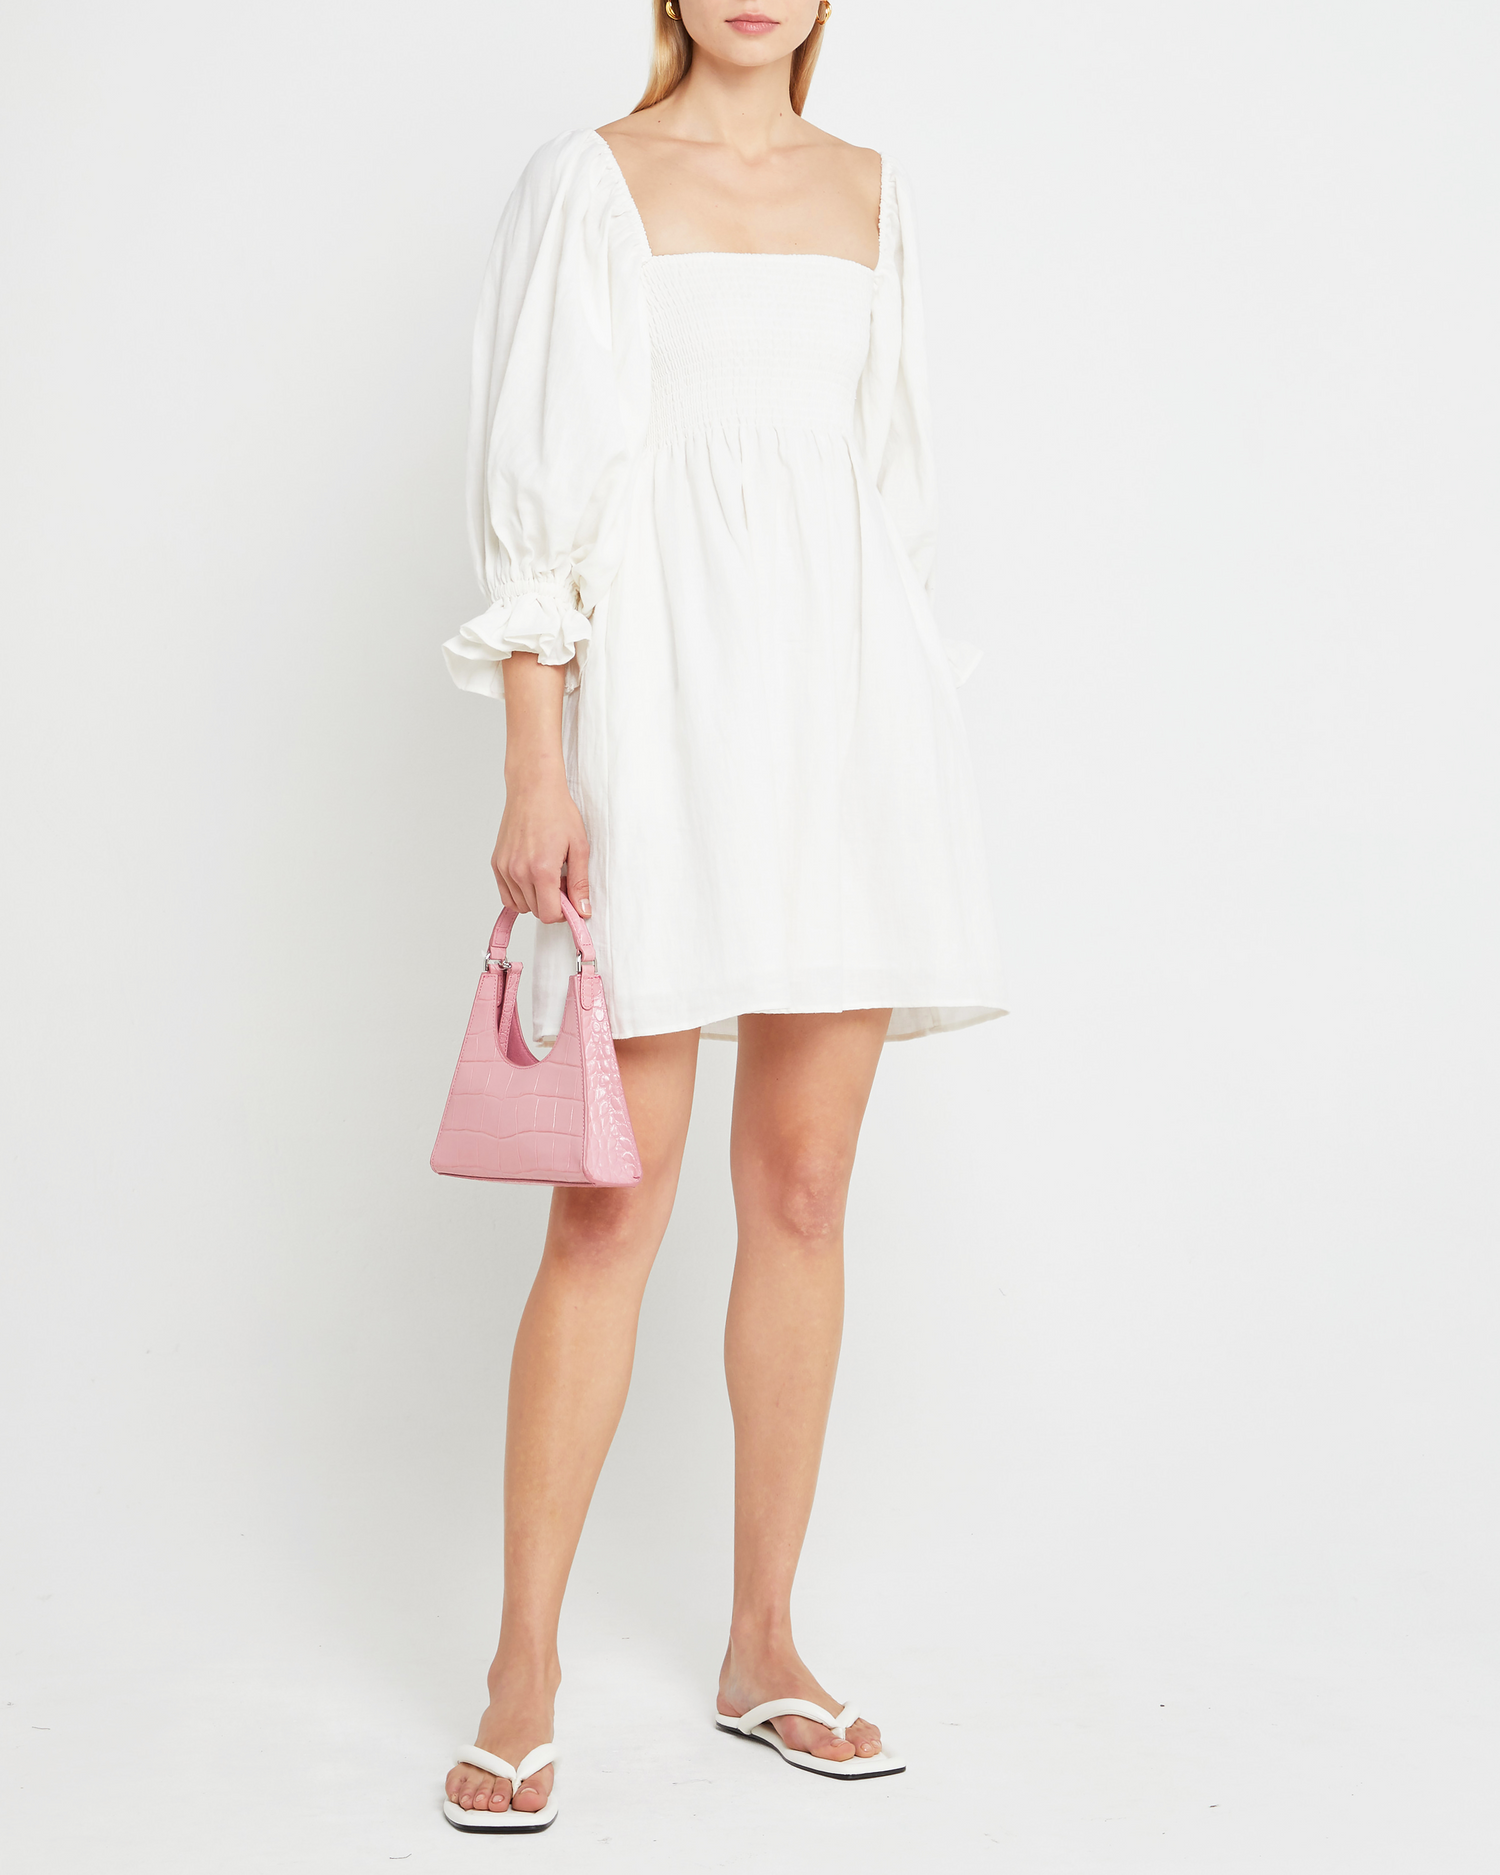 Third image of Portia Mini Dress, a white mini dress, puff sleeves, smocked, square neckline